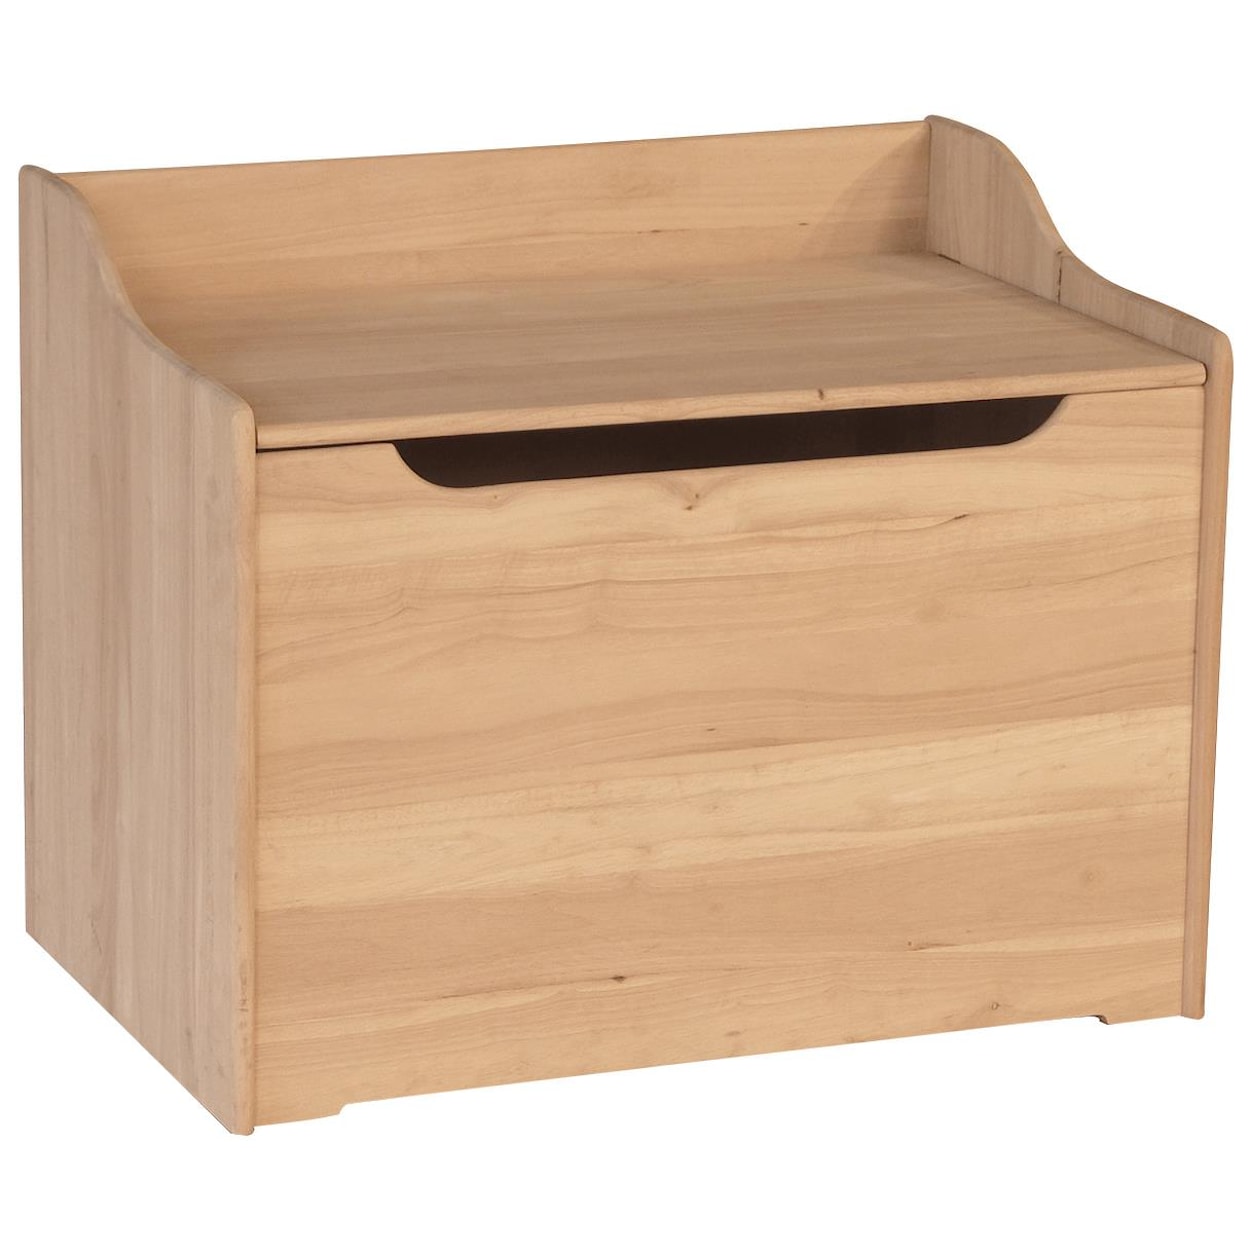 Whitewood Juvenile Kid's Storage Bench/Chest